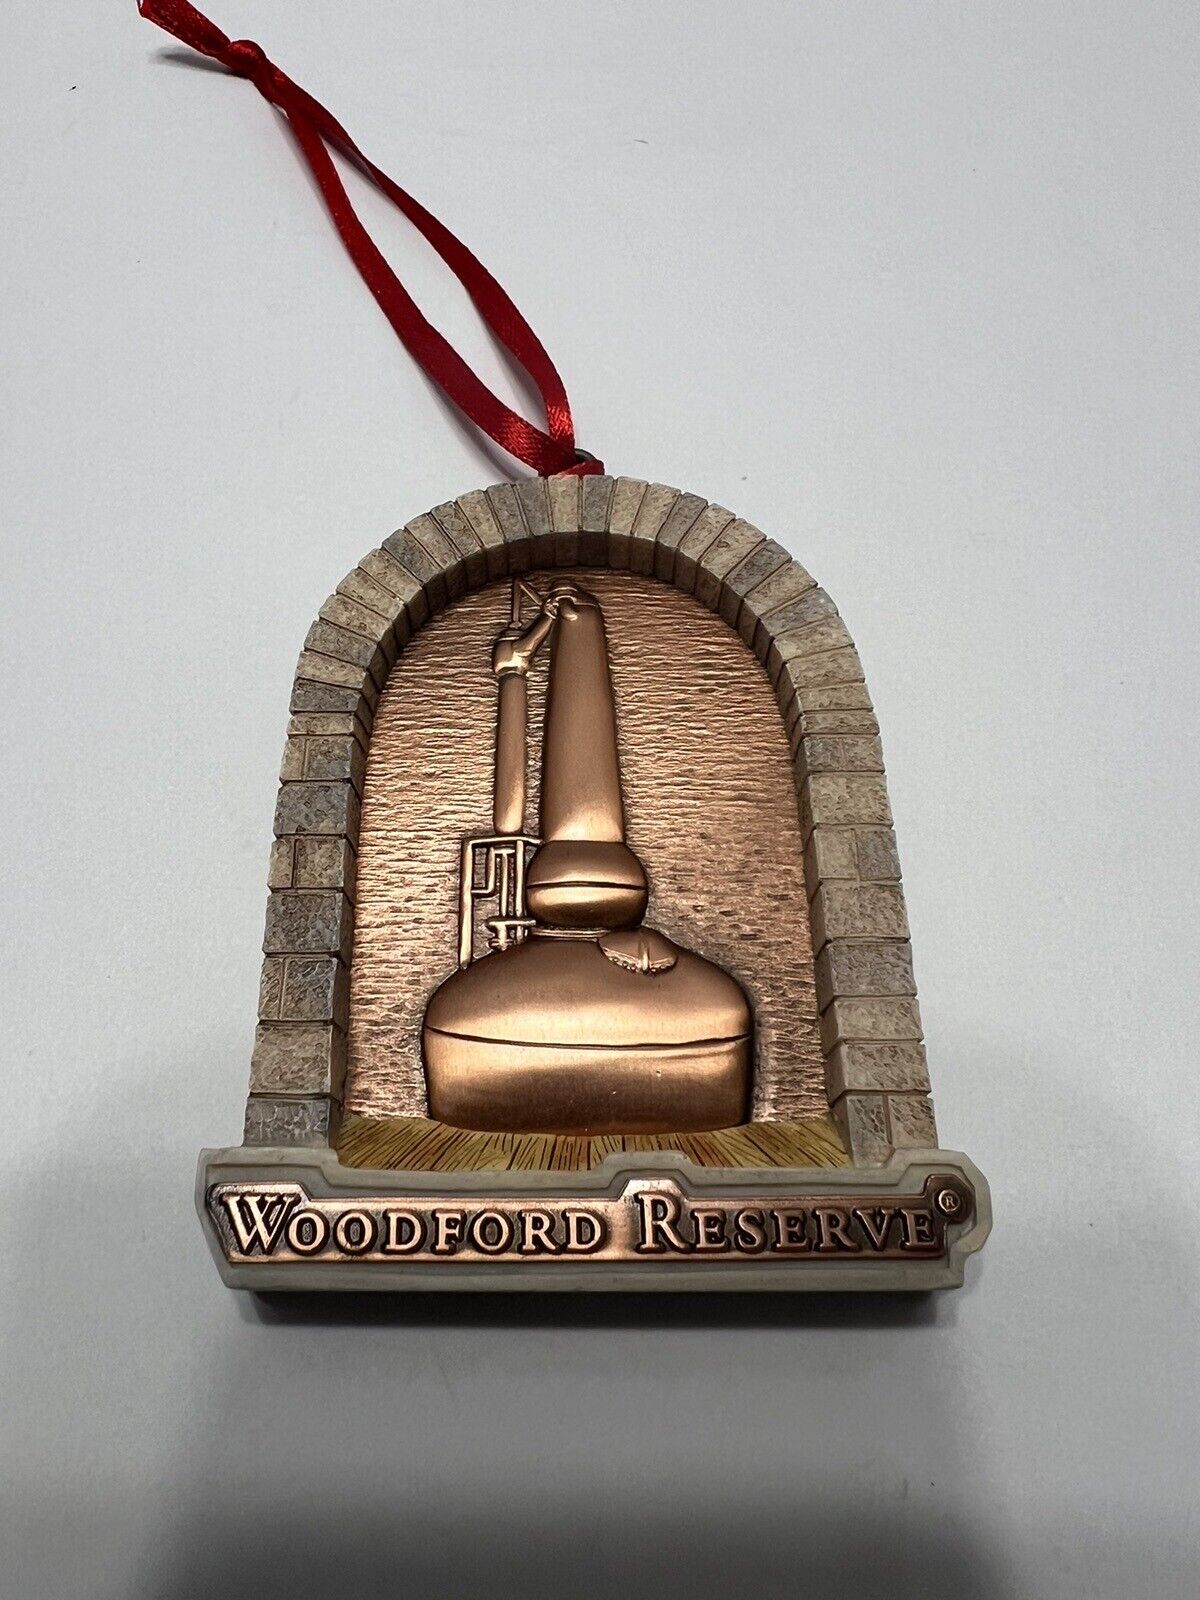 Woodford Reserve Bourbon Whiskey Copper Still Ornament